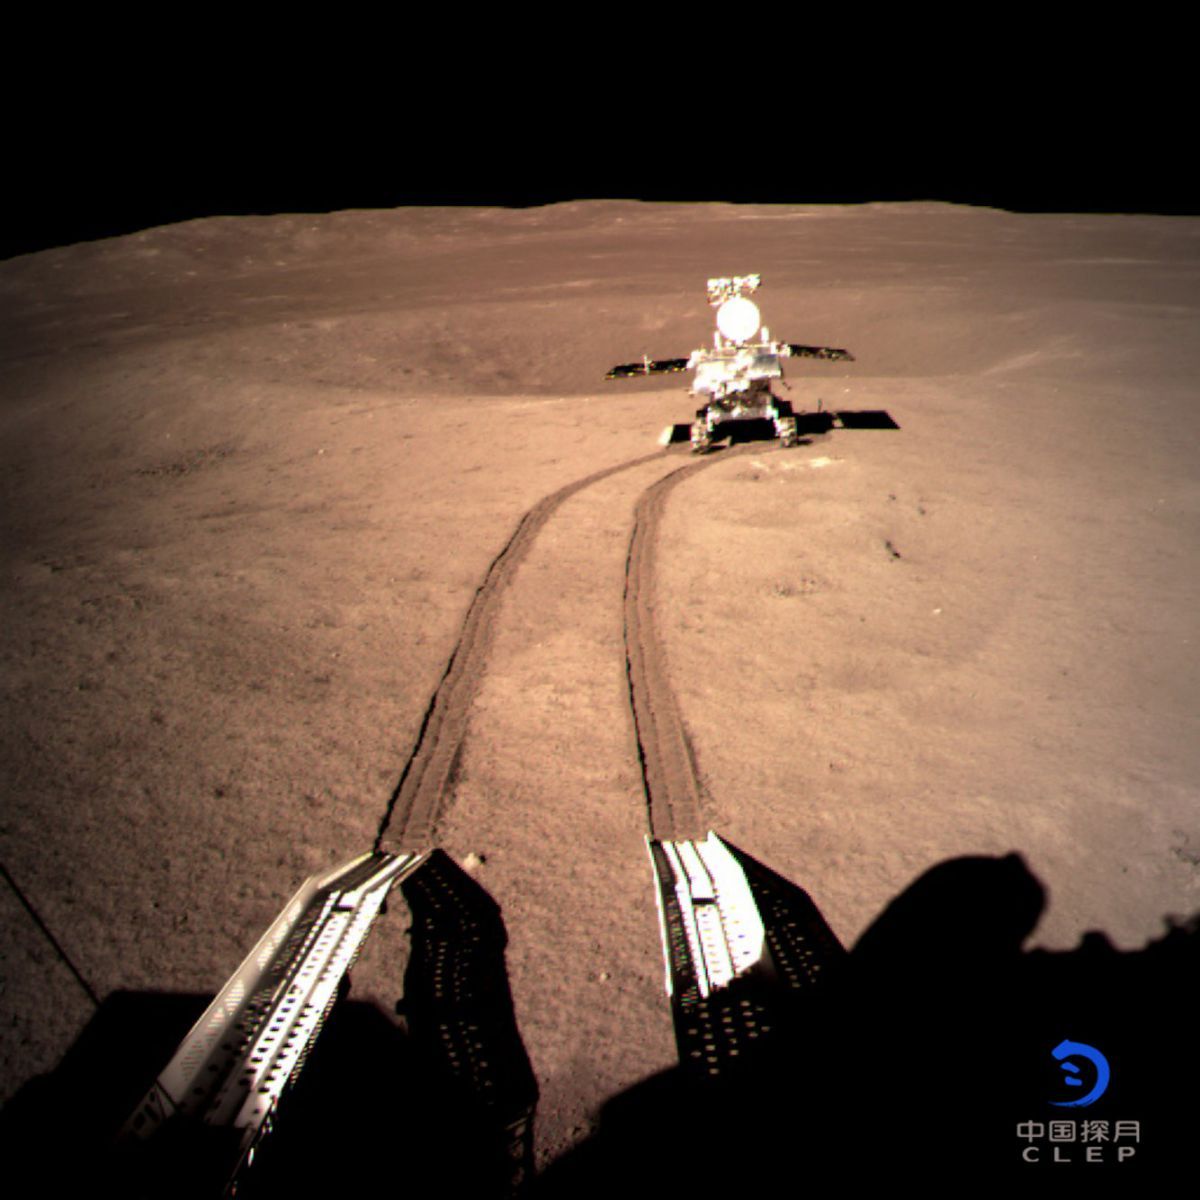 YUta 2 rover rolling moon tracks